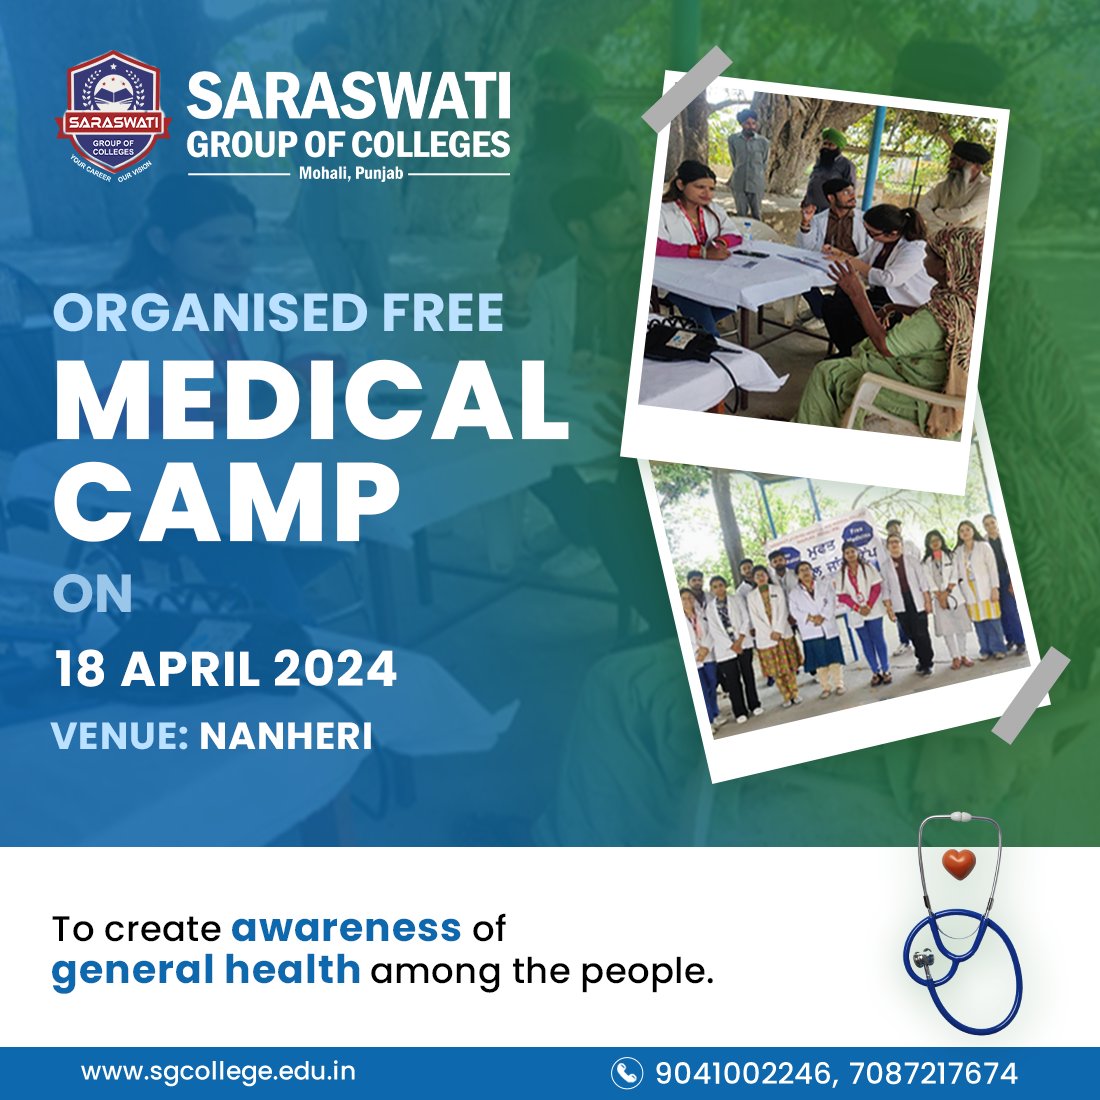 Saraswati Ayurved Hospital Organised Free Medical Camp On 18 April 2024! 

Venue: Nanheri 

Call Now:- 9041002246, 70872 17674
.
.
#SaraswatiAyurvedHospital #FreeHealthCheckUps #MedicalCamp #AyurvedicHealthcare #Nanheri #HealthcareEvent #CommunityHealth #SGCollegeMohali